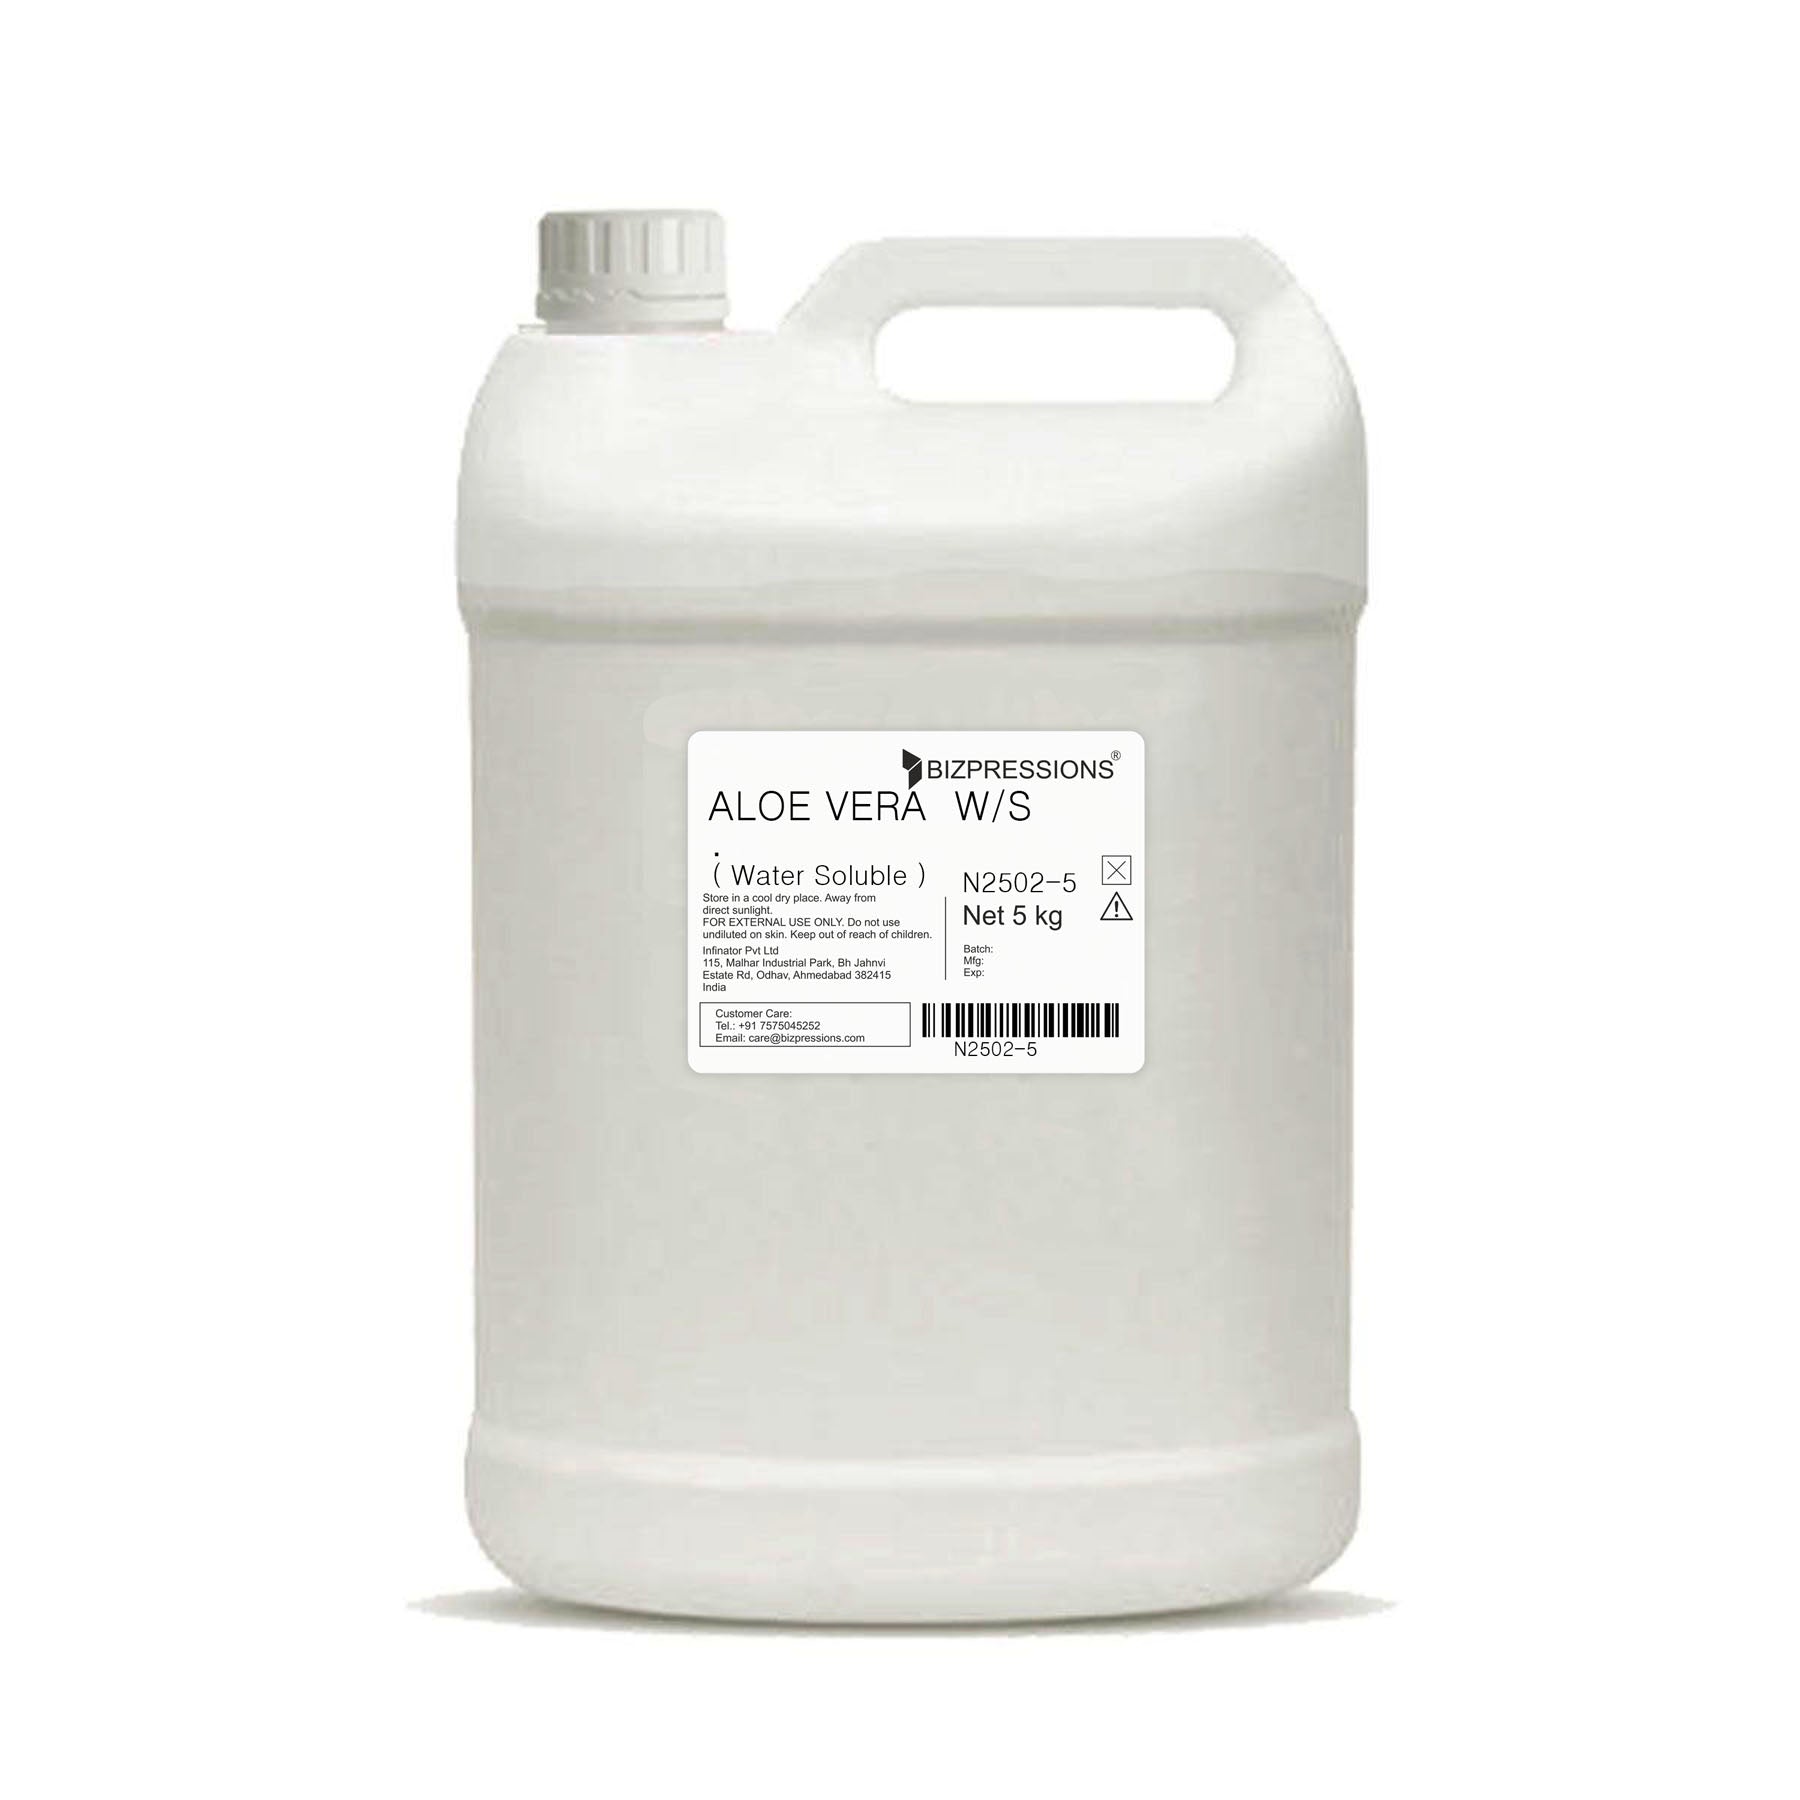 ALOE VERA W/S - Fragrance ( Water Soluble ) - 5 kg